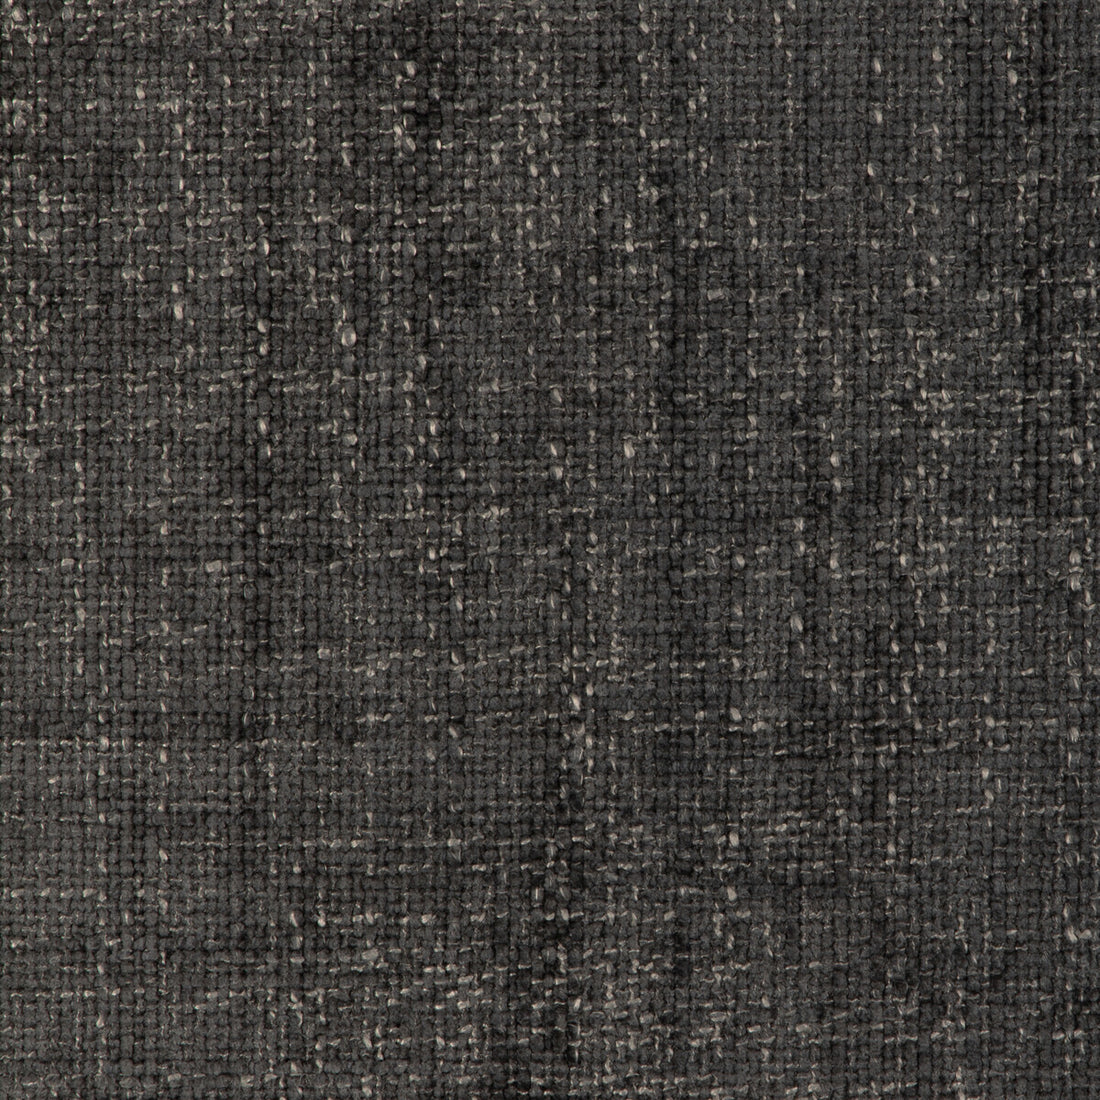 Kravet Smart fabric in 36677-21 color - pattern 36677.21.0 - by Kravet Smart in the Performance Kravetarmor collection